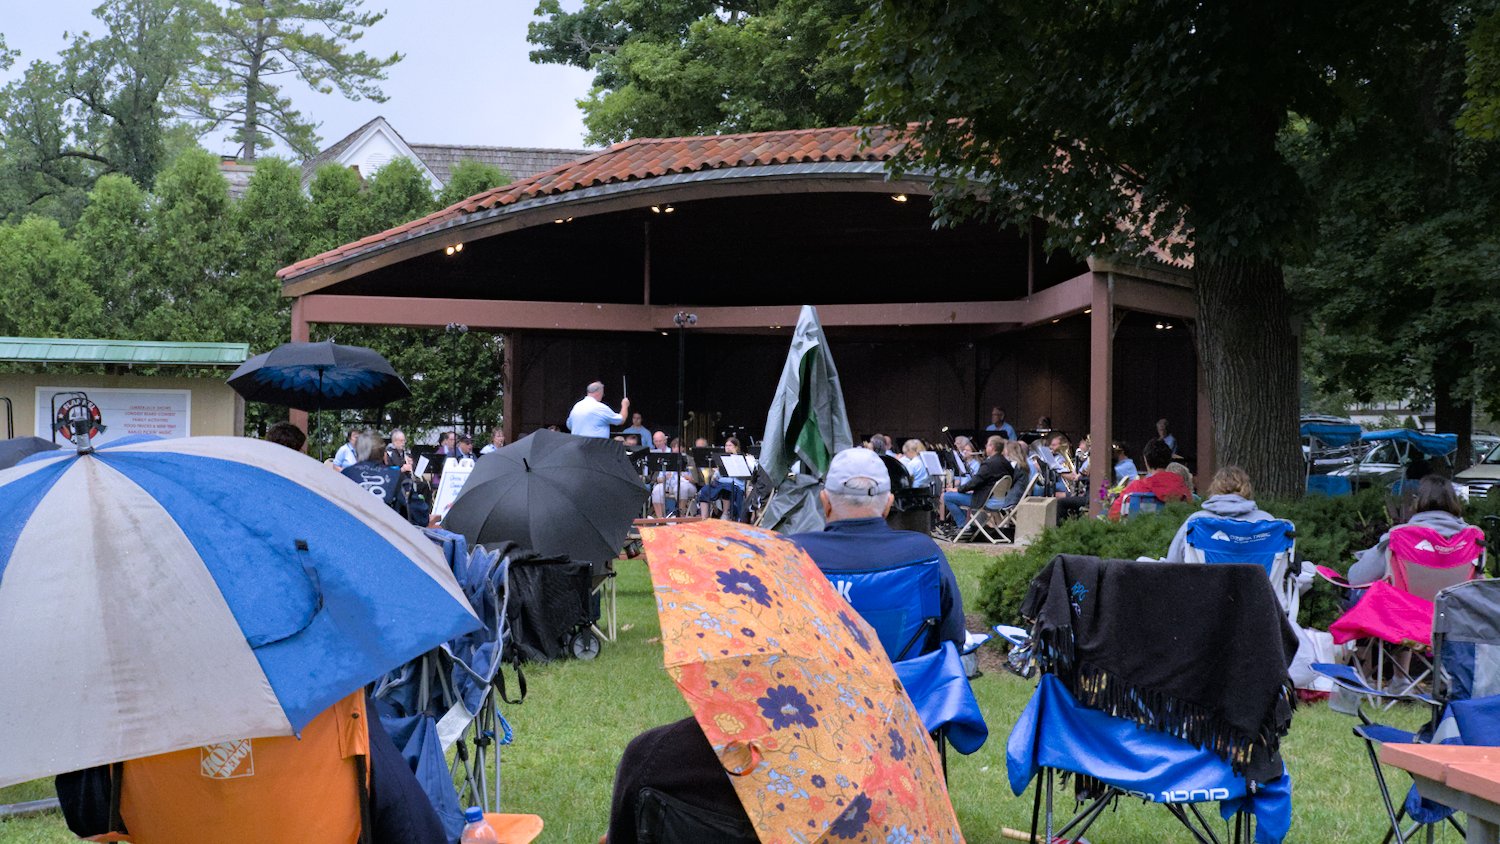 Umbrellas shielding the audience.